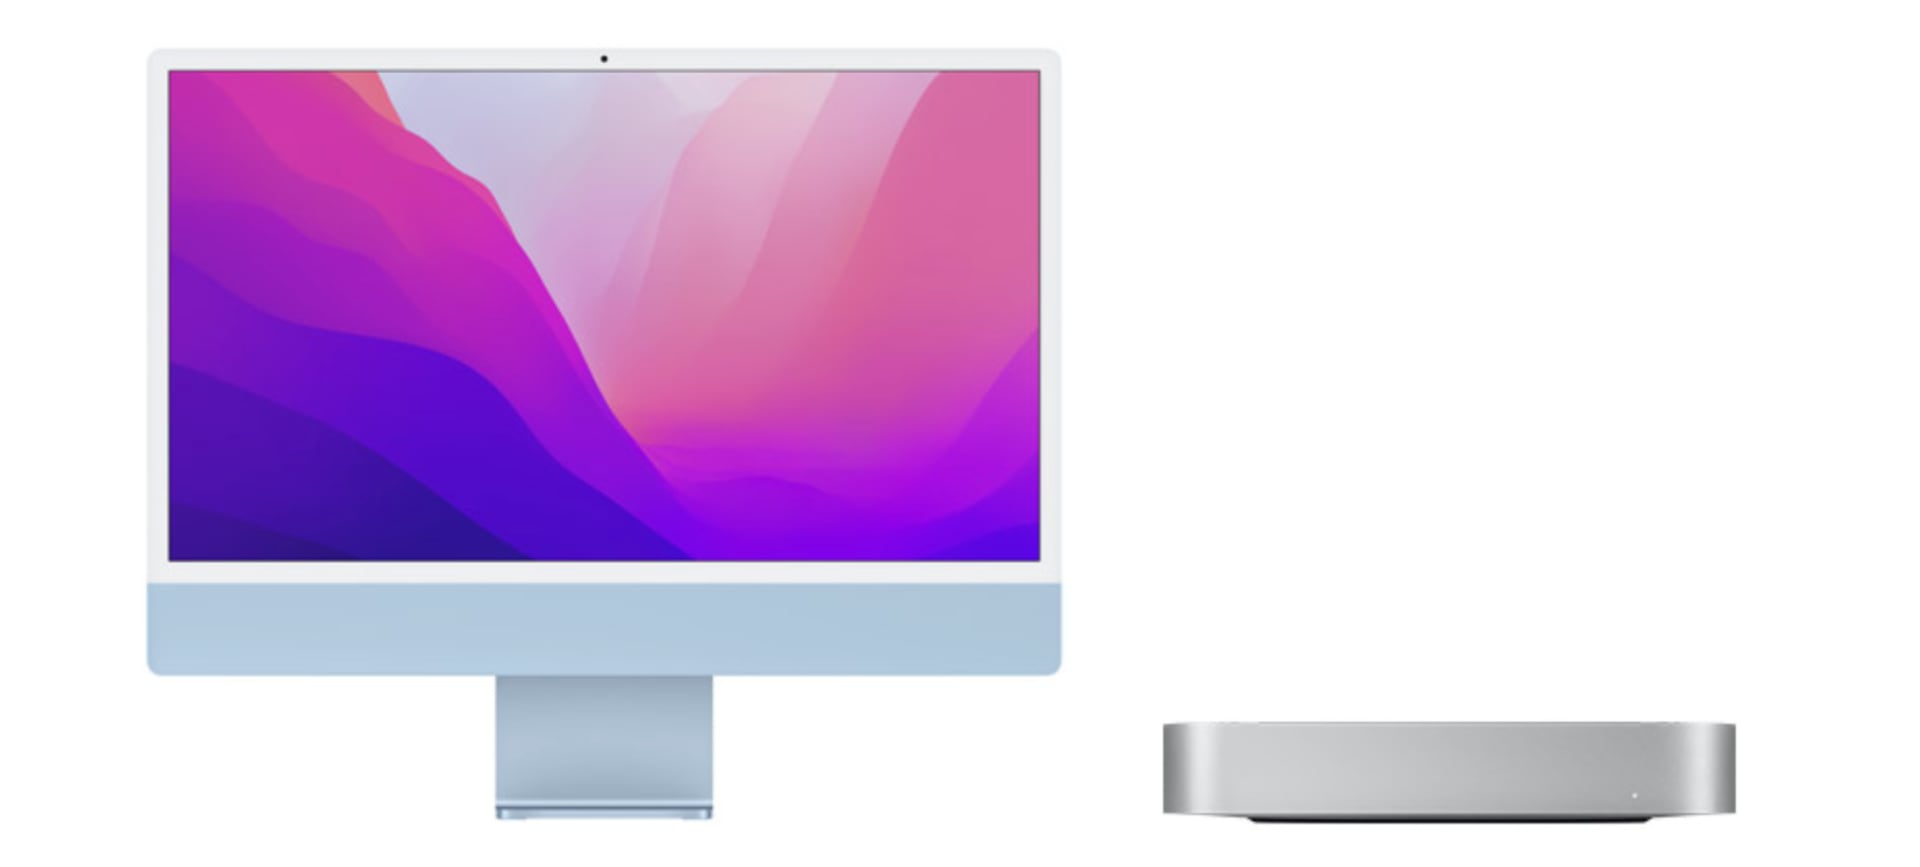 Mac mini vs iMac